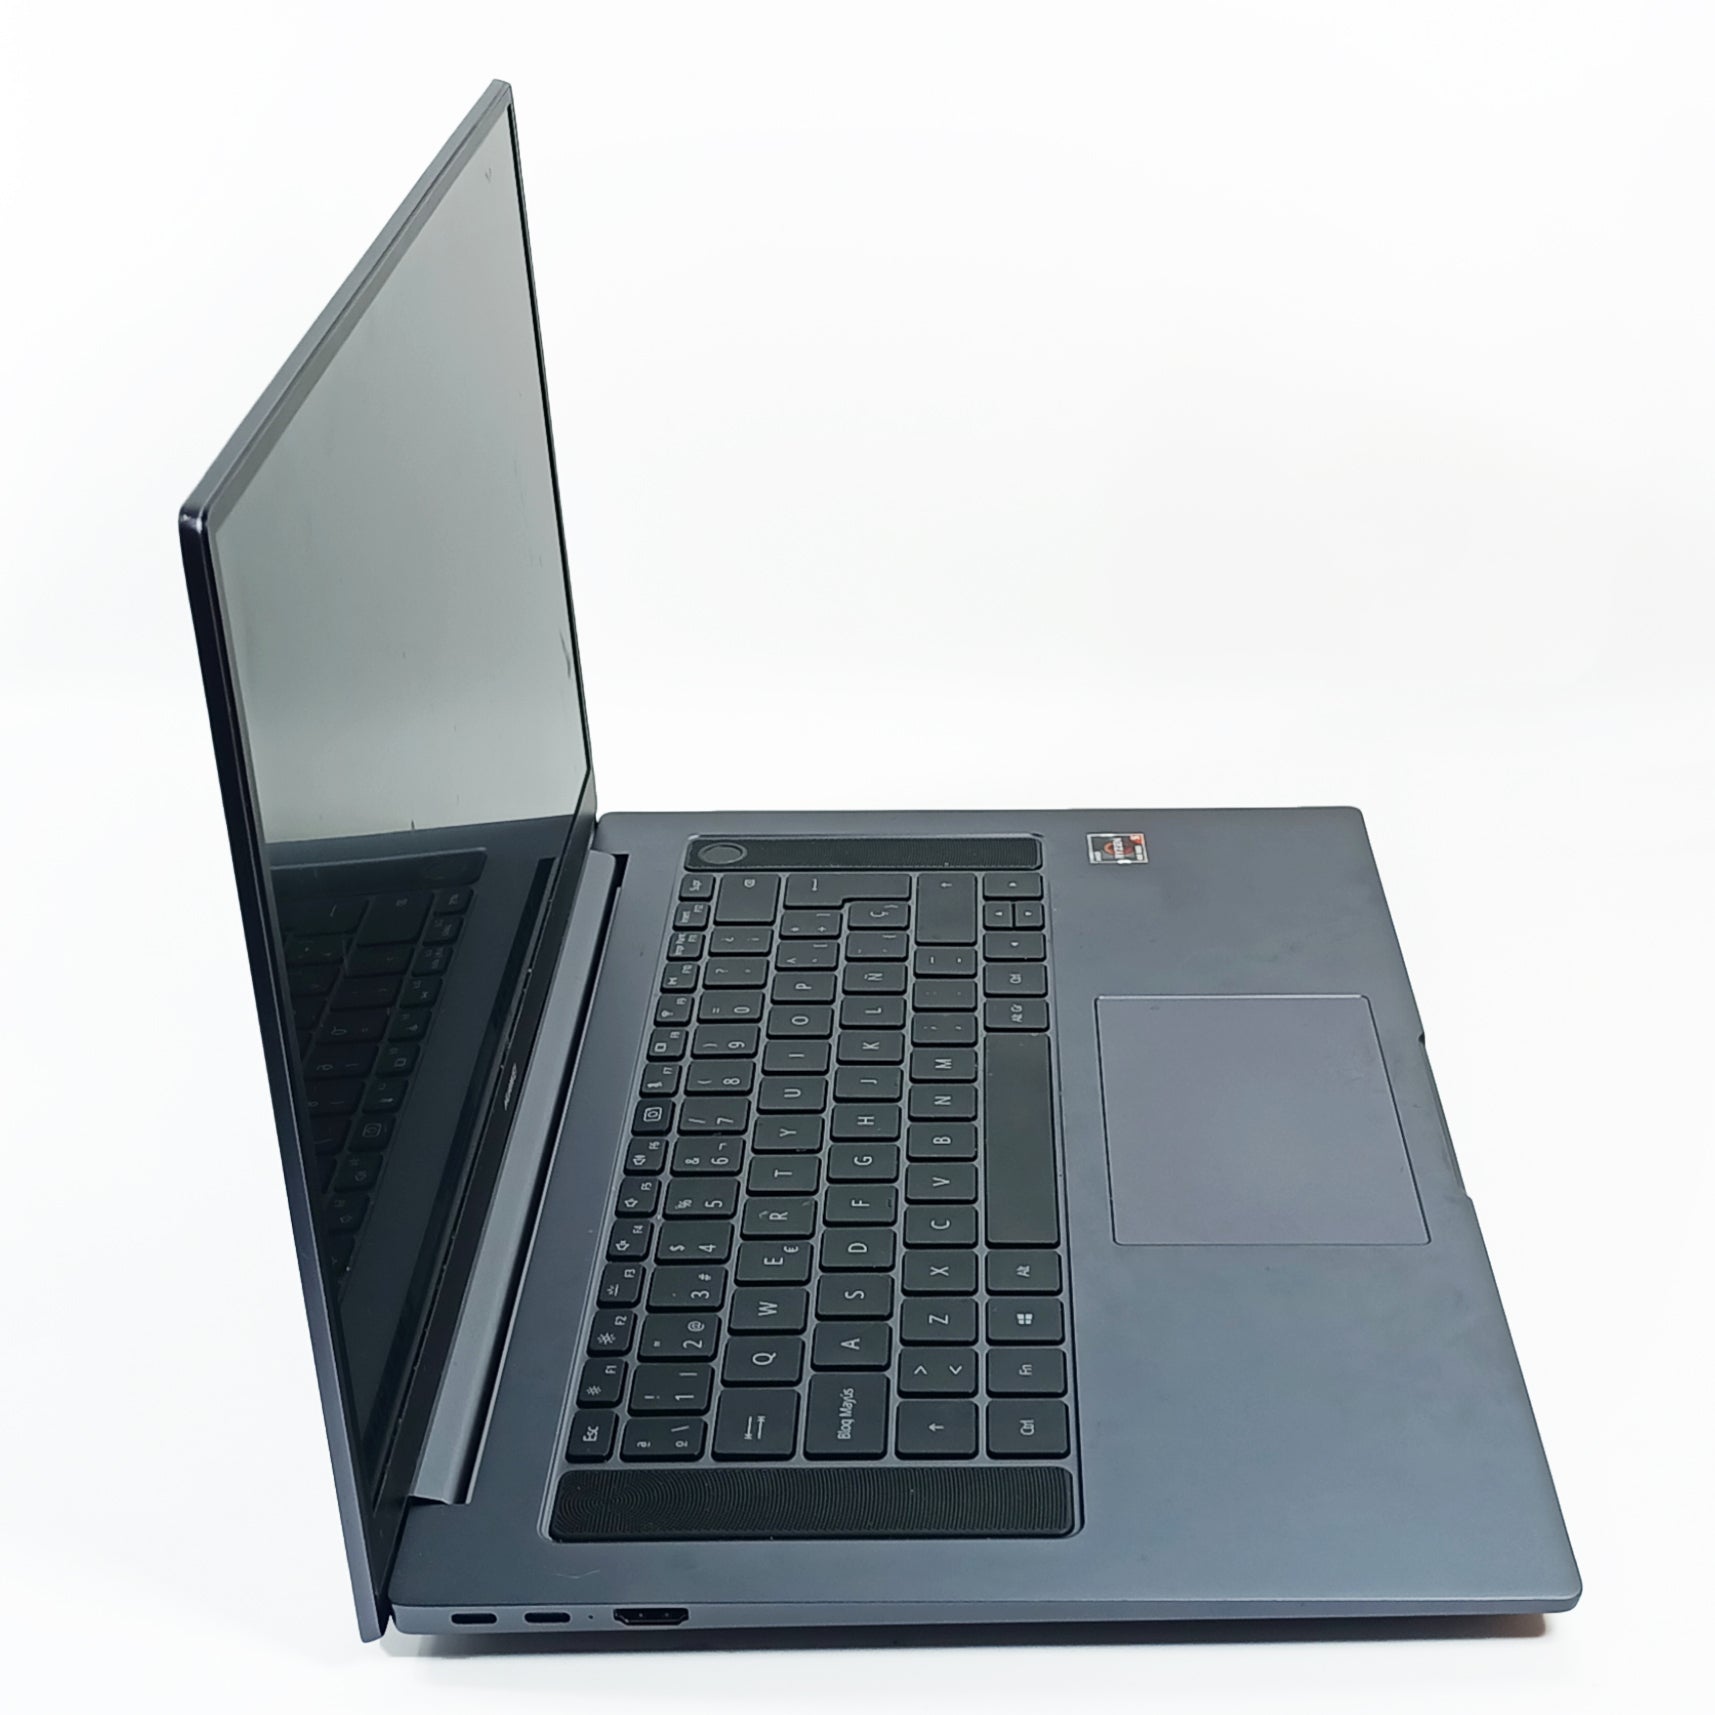 Laptop  Huawei Matebook D 16 HVY-WAP9 (2020) (seminuevo)